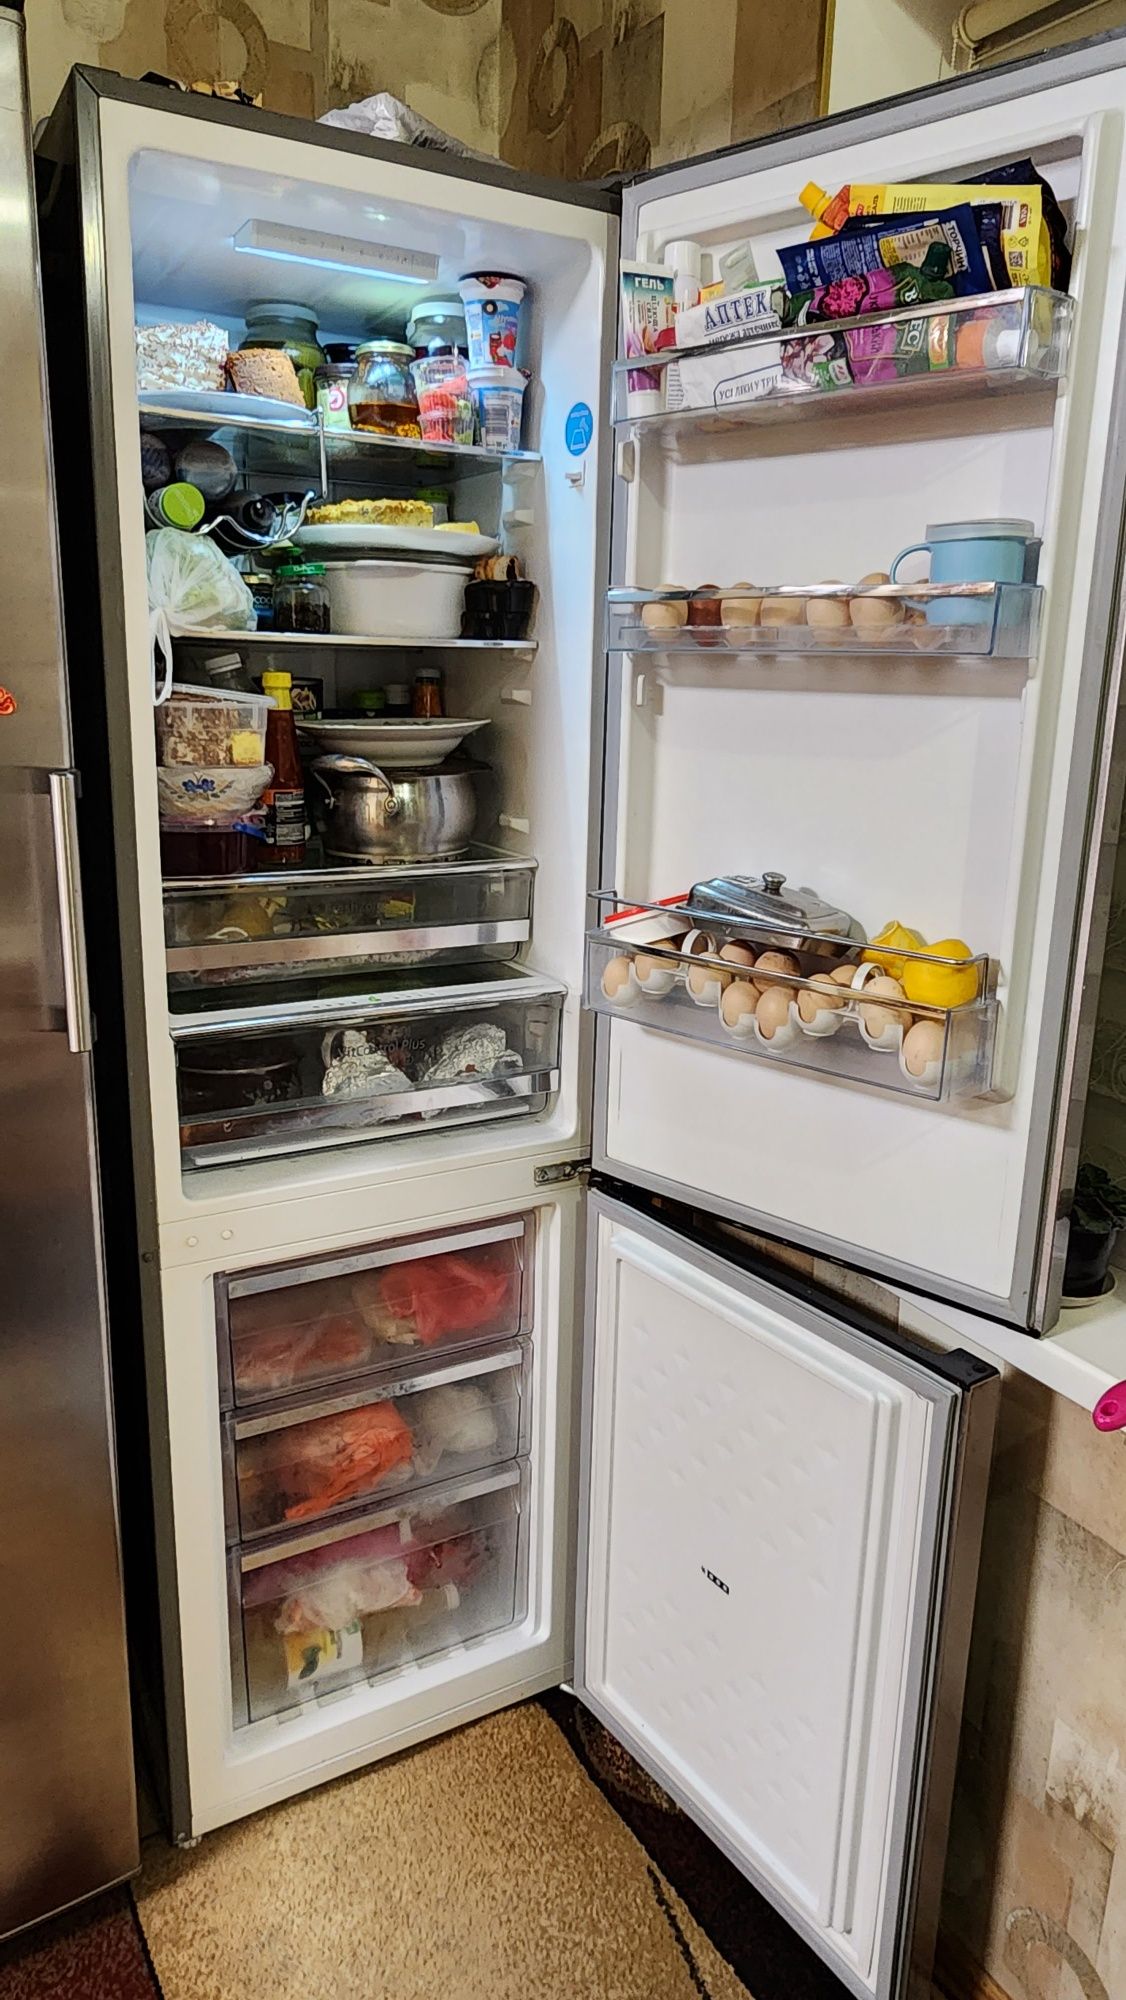 Холодильник Amica